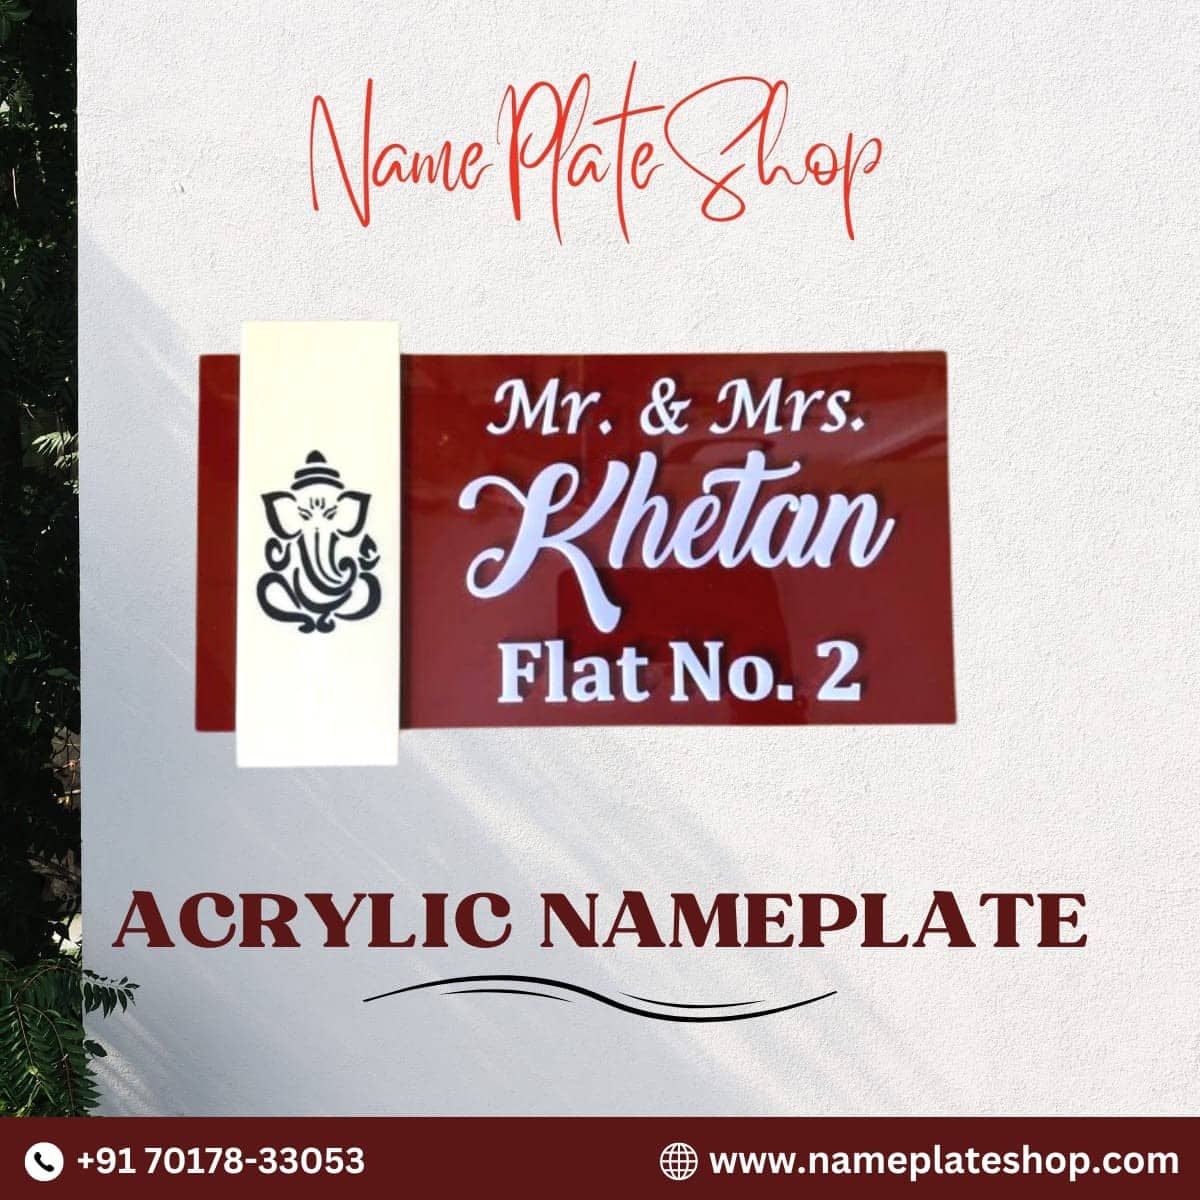 Acrylic Nameplate Collection Contact NamePlateShop